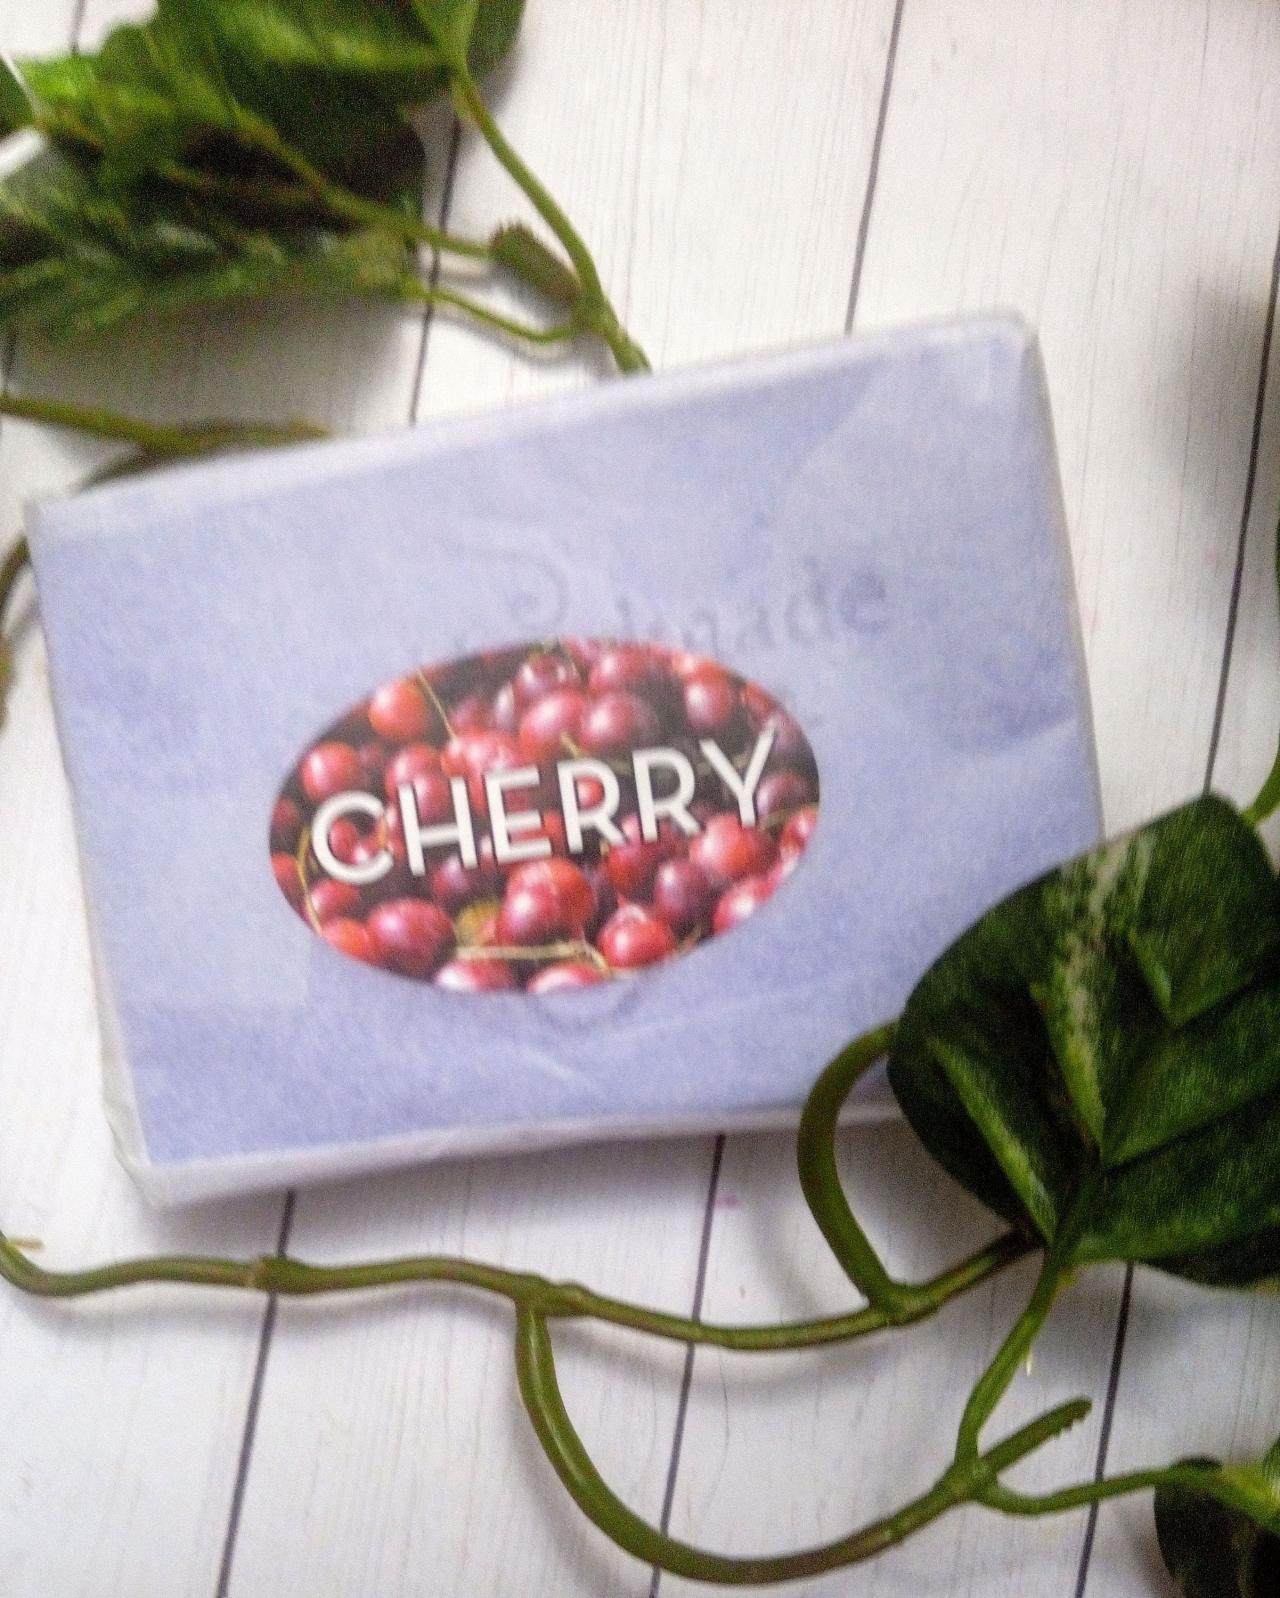 Cherry Soap, Health And Beauty, Bar Soap, Bathing Soap, Bath And Body, Fruity Soap, Moisturizing Soap, Glycerin Soap